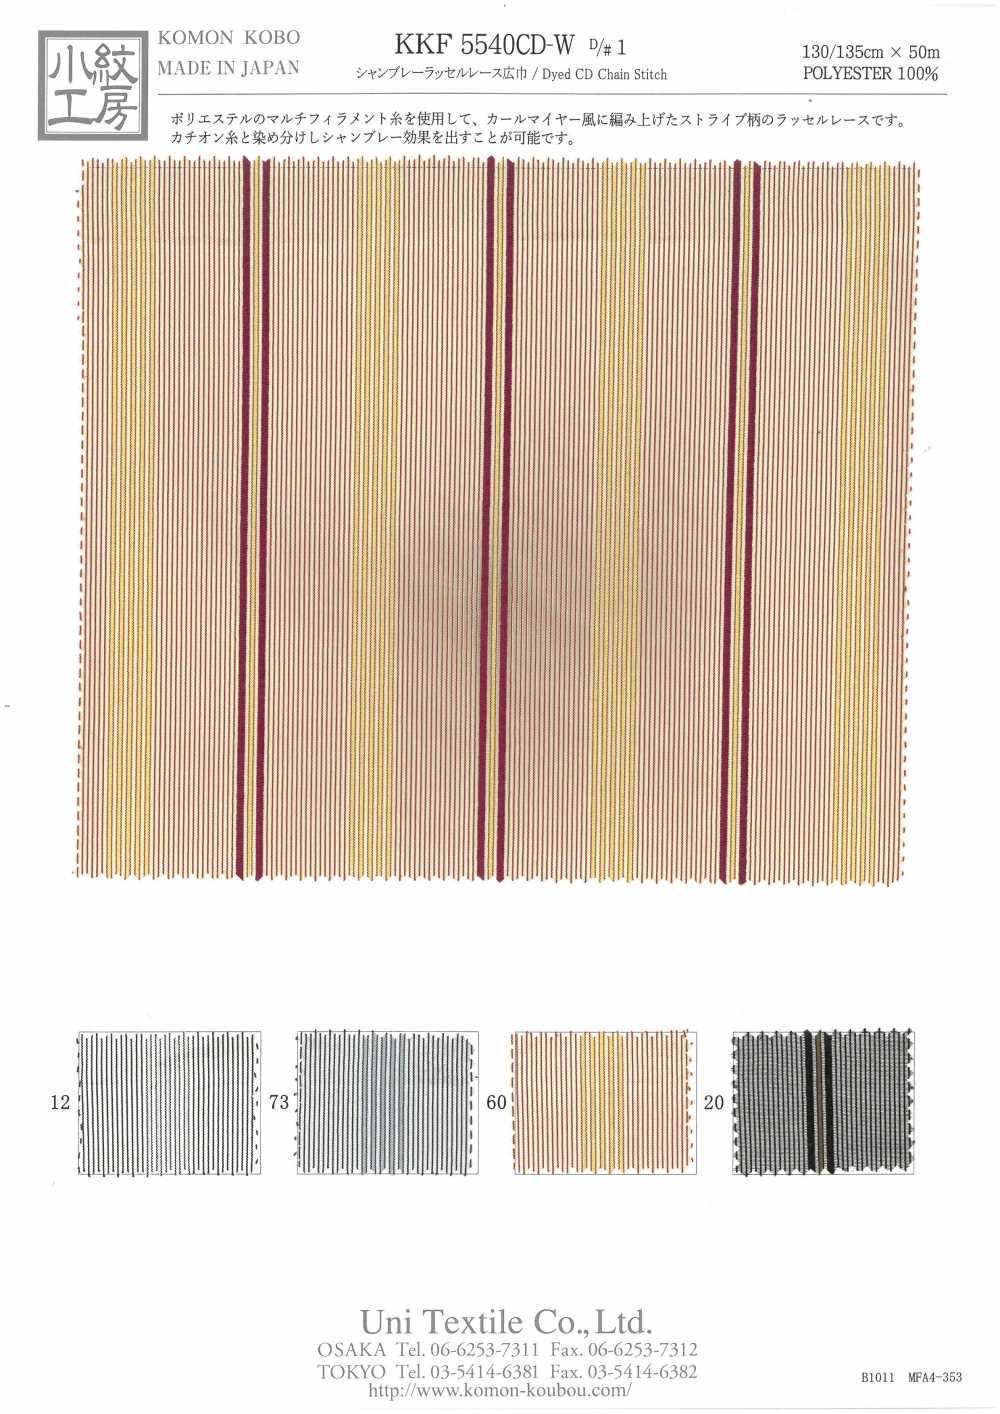 KKF5540CD-W-D/1 Vải Chambray Vải Ren Dệt Khổ Rộng Uni Textile